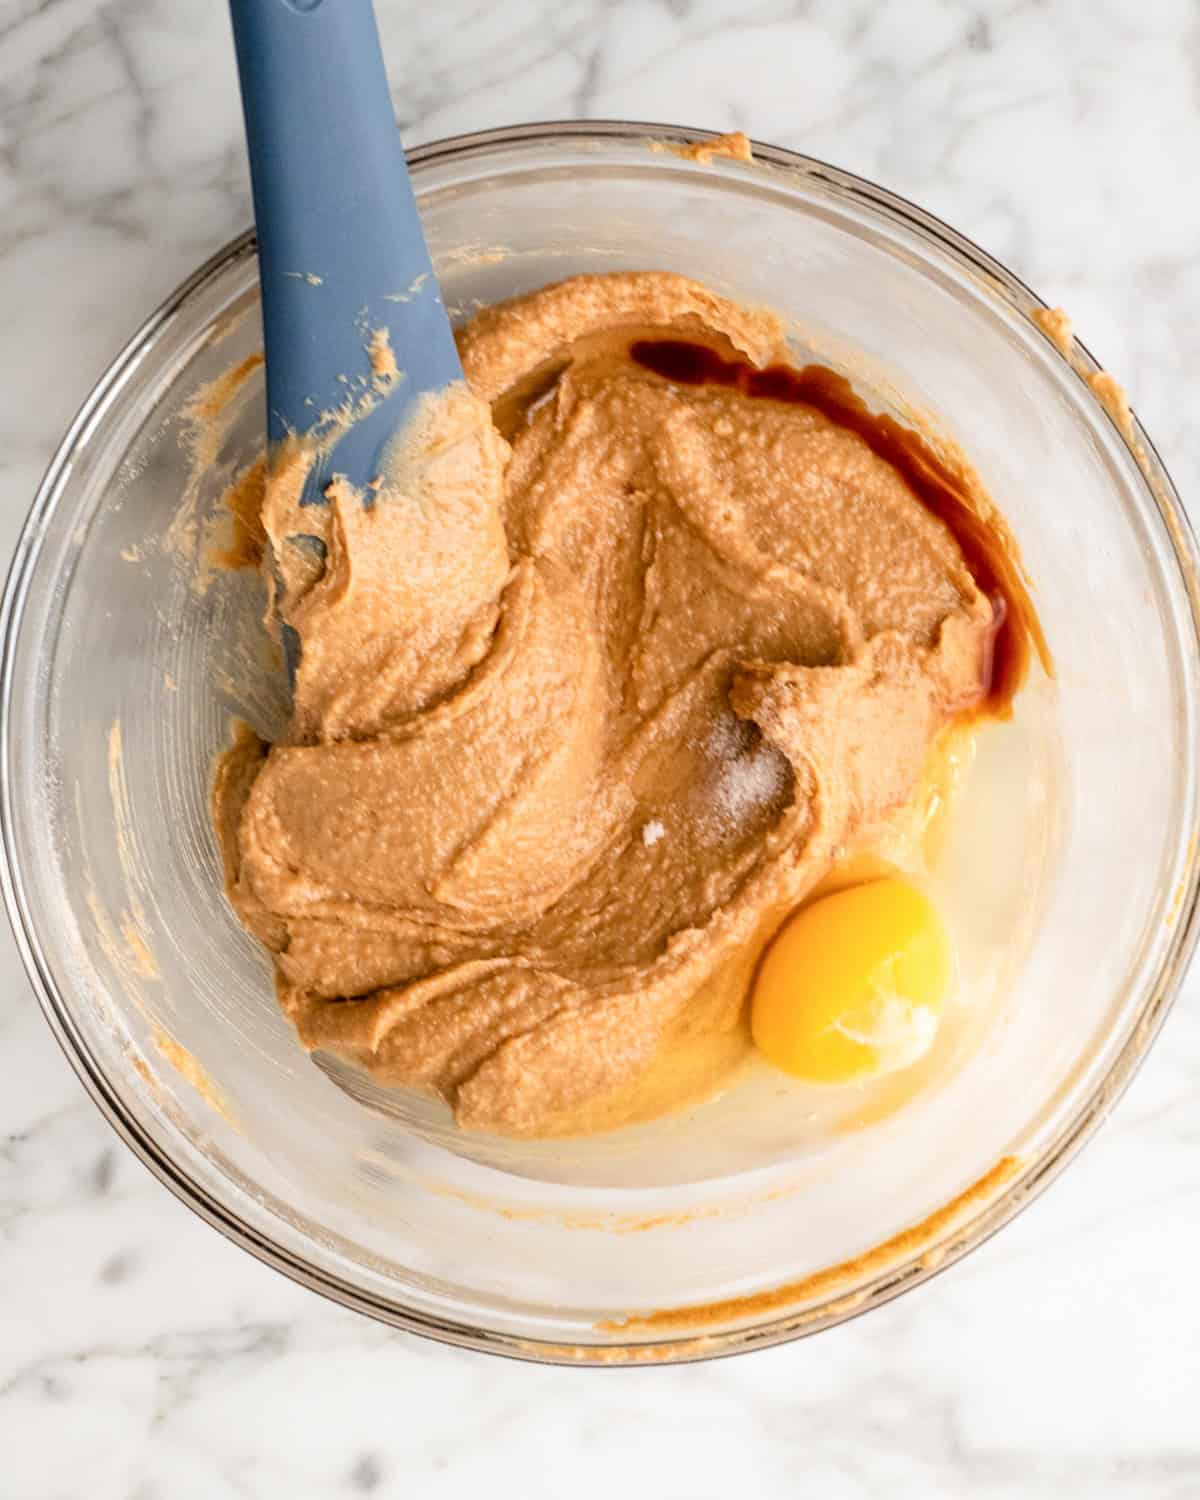 making Gluten Free Peanut Butter Blossoms - adding egg, vanilla and salt